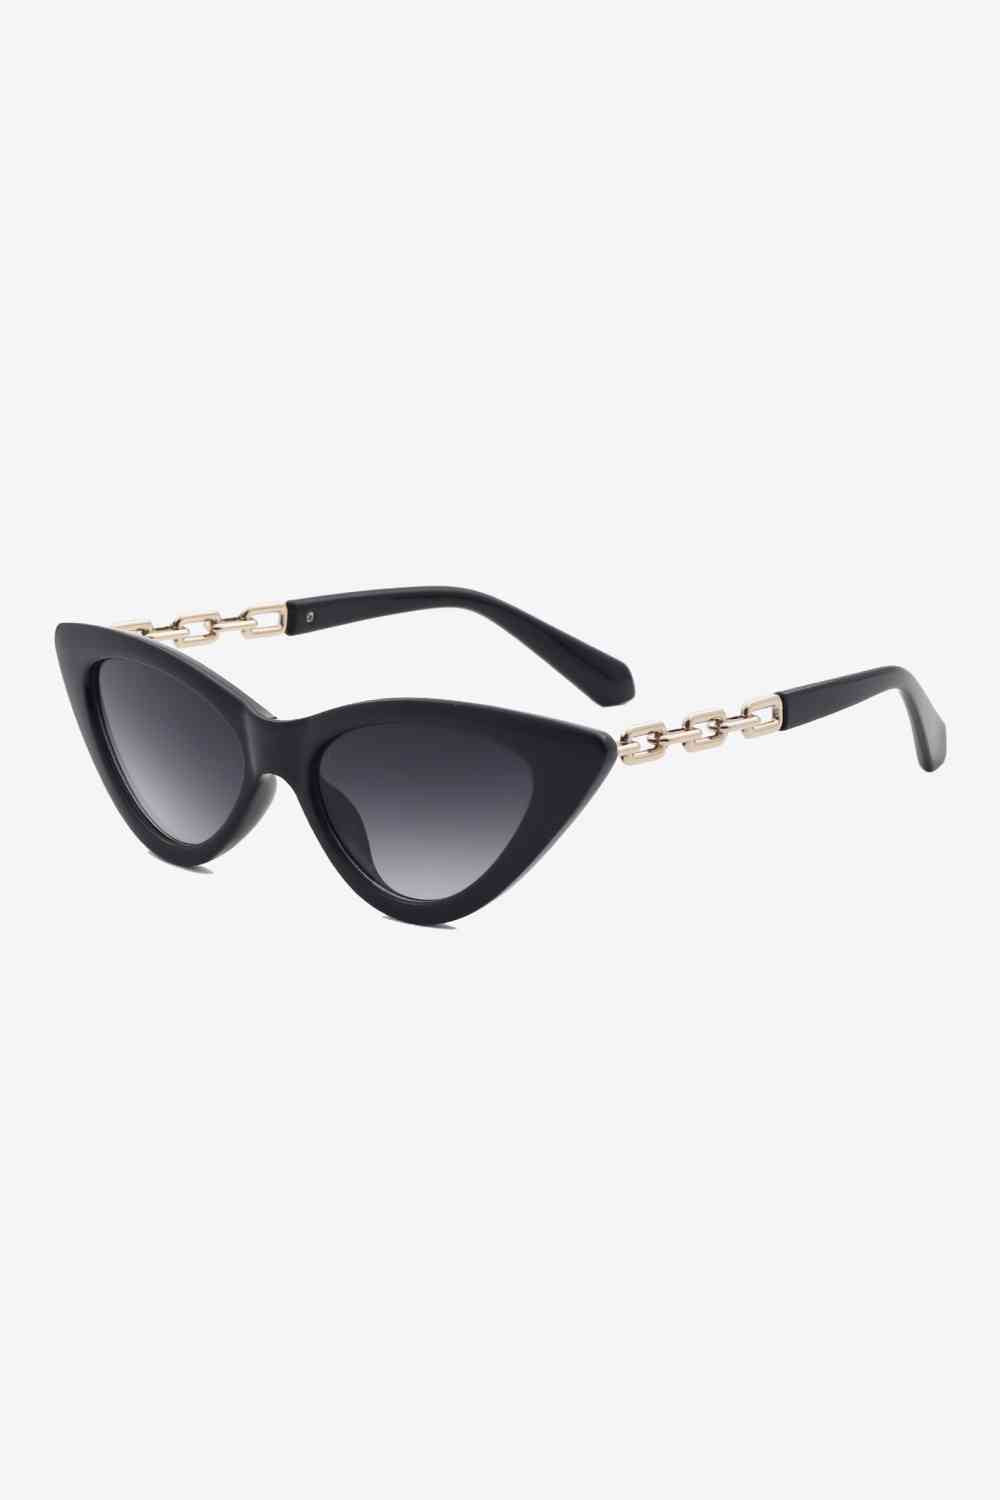 TEEK - Size Chain Cat-Eye Sunglasses EYEGLASSES TEEK Trend Black  